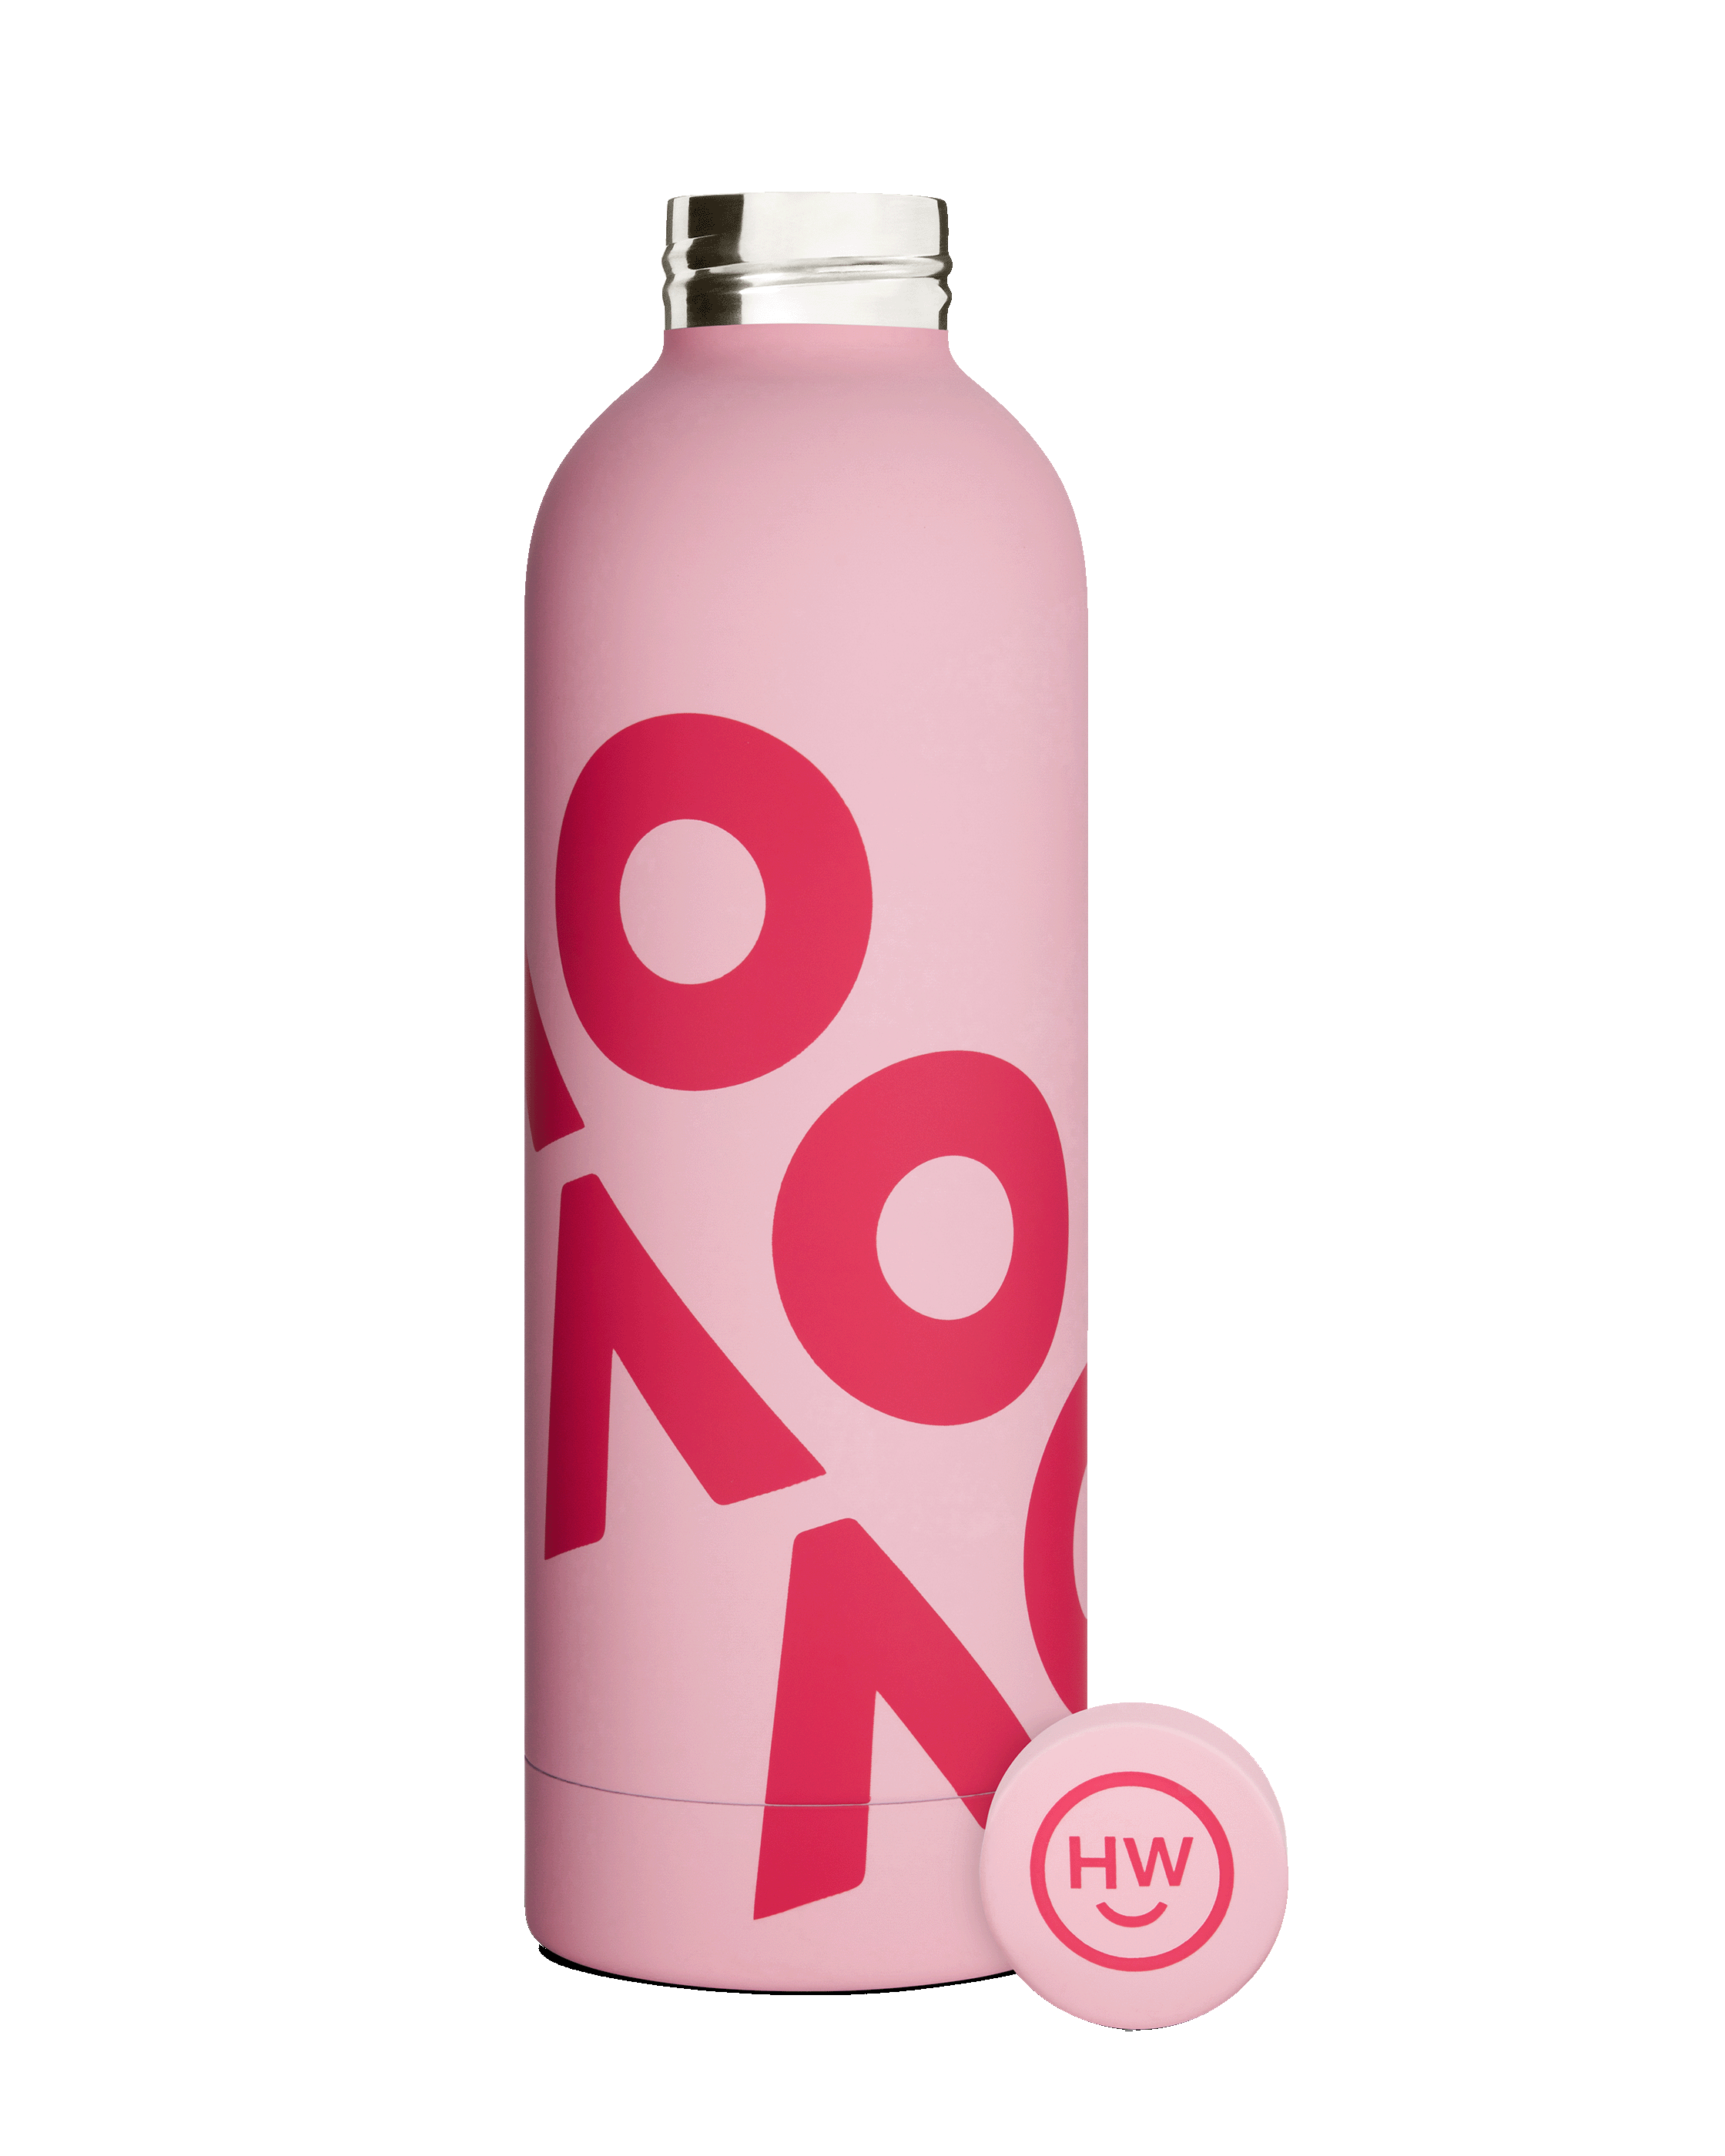 Pastel bottle - pink